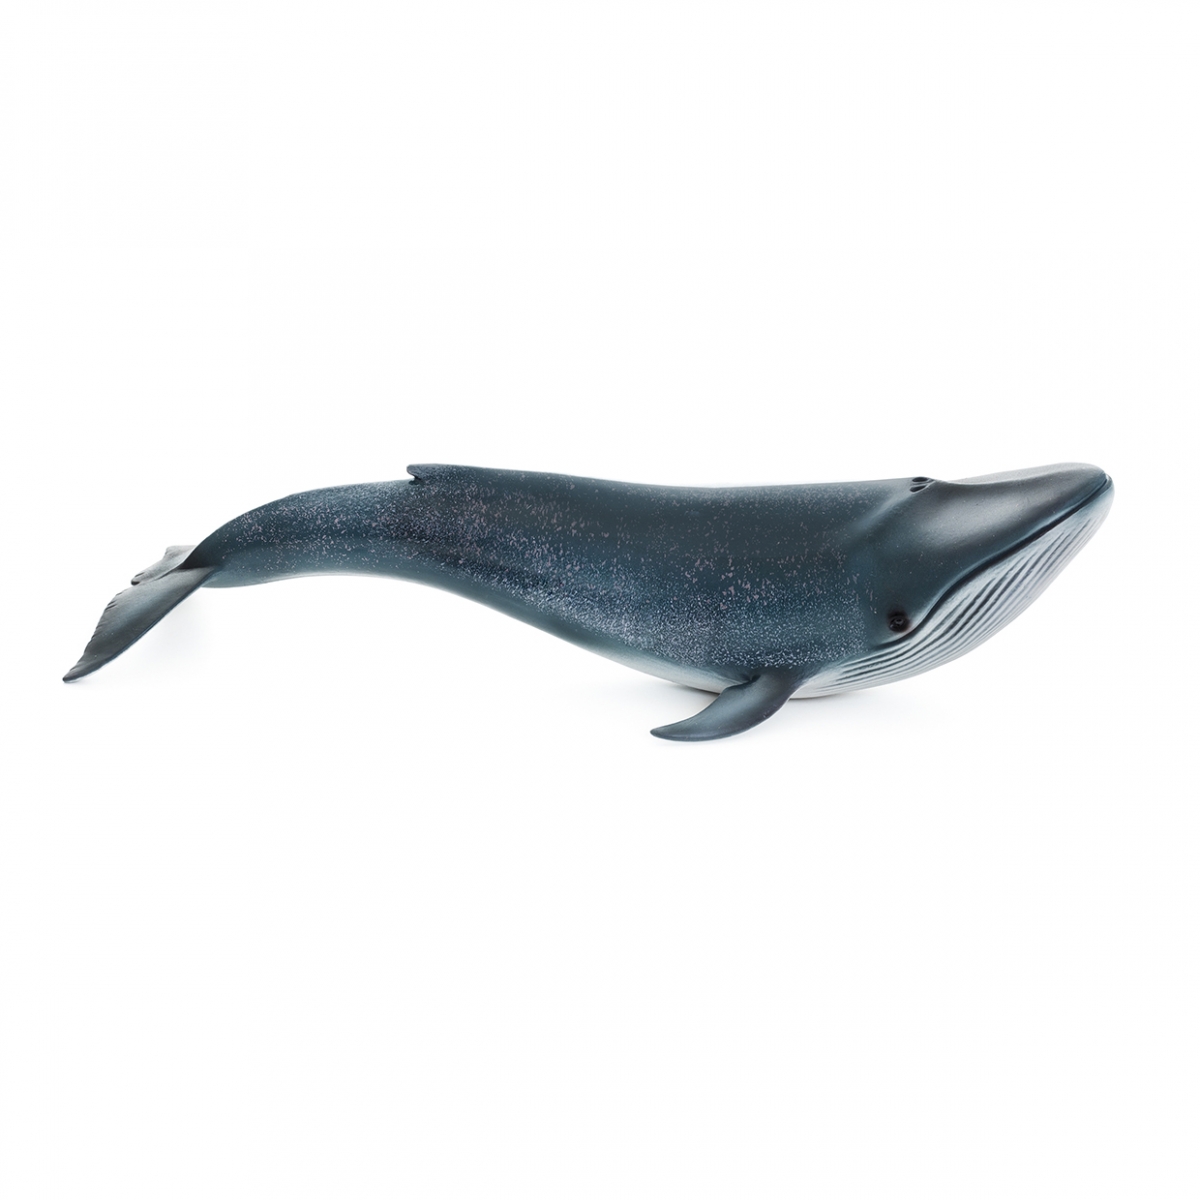 Imagen de una ballena